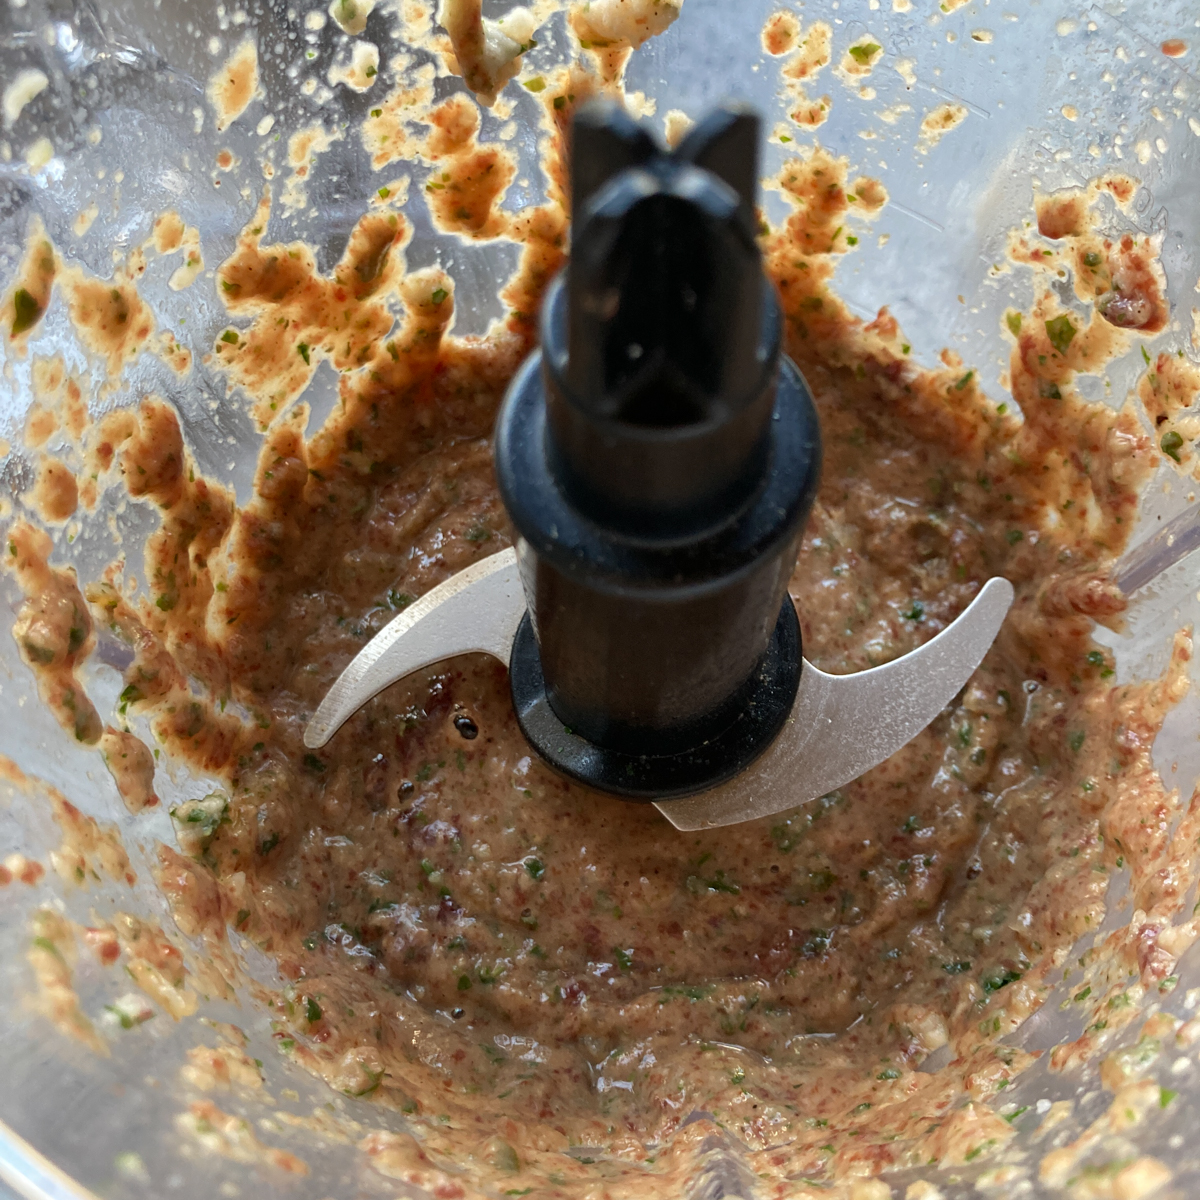 Flüssige Leberknödel-Masse nach dem Mixen im Standmixer - Ingredients for Liver Dumplings with a blender.